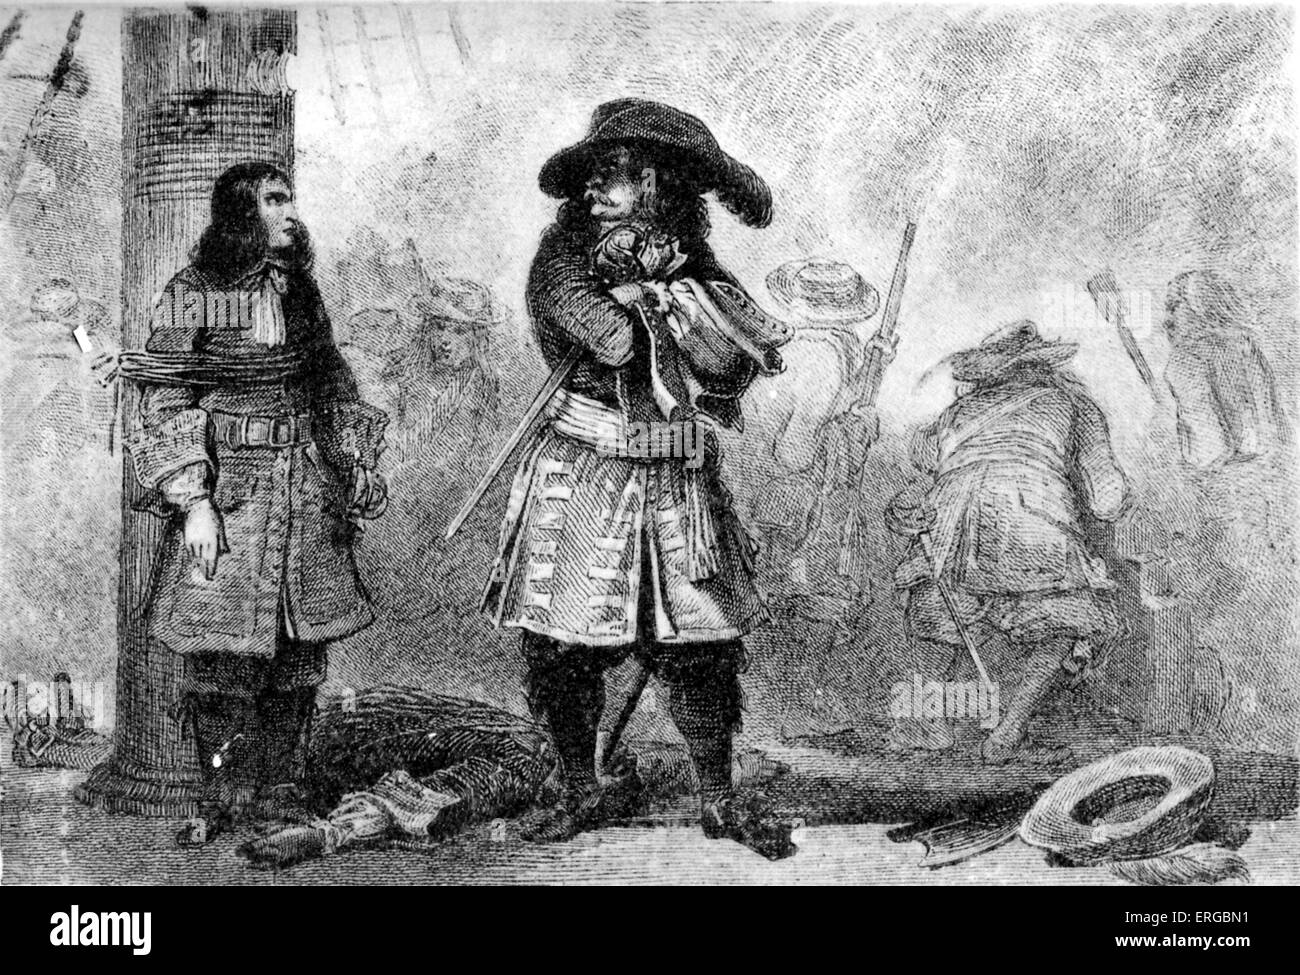 Jean Bart, Flamenco marinero, sirvió a la corona francesa como comandante naval y privateer. JB: El 21 de octubre de 1651 - 27 de abril de 1702. Después Foto de stock